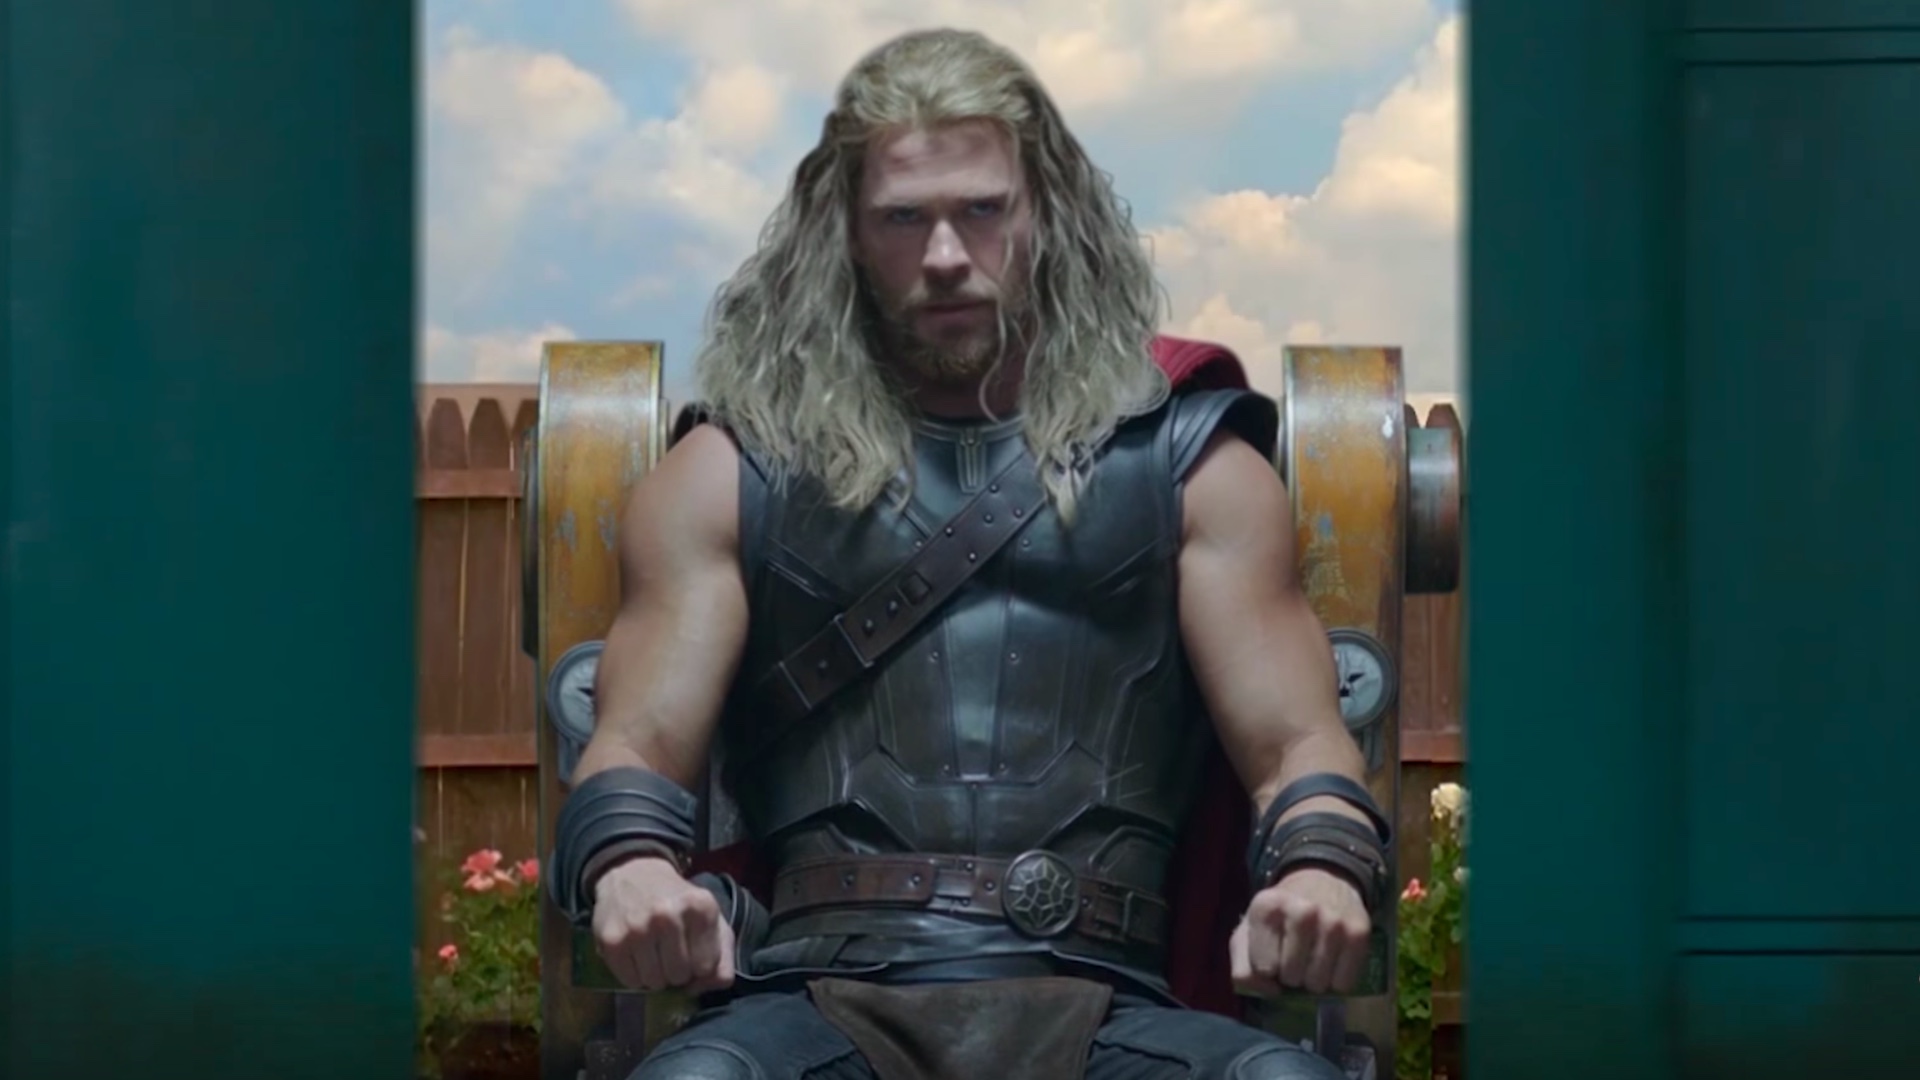 Chris Hemsworth Sports Shorter Curly 'Do in First Look at 'Thor: Ragnarok'